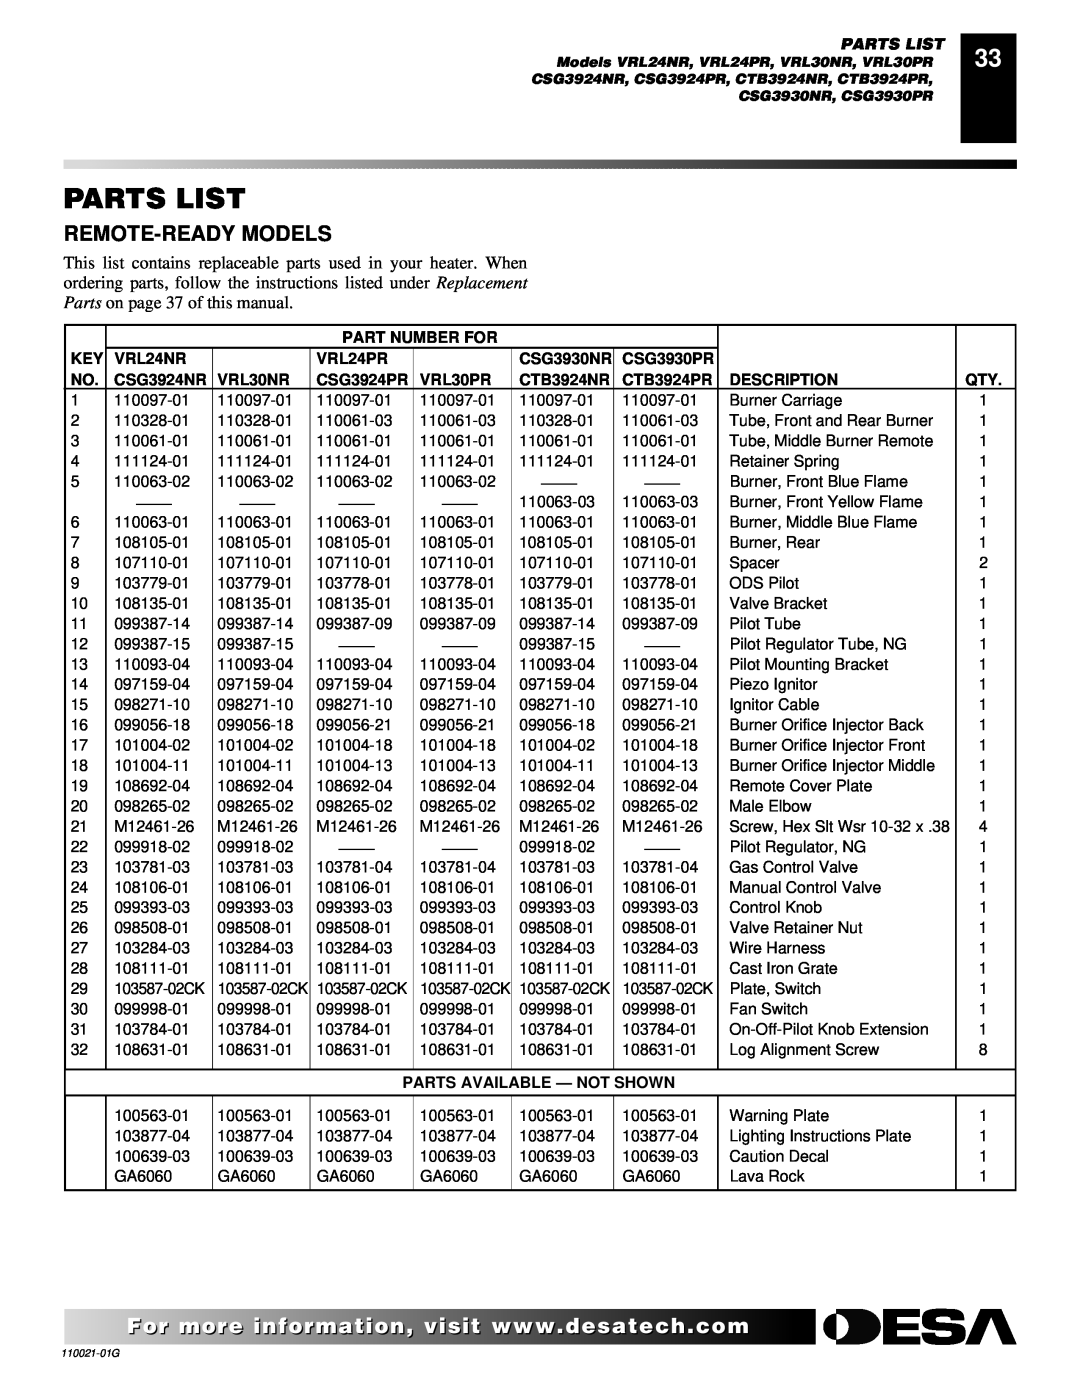 Desa CSG3930NR Parts List, Remote-Readymodels, Part Number For, VRL24NR, VRL24PR, CSG3930PR, CSG3924NR, VRL30NR, CSG3924PR 